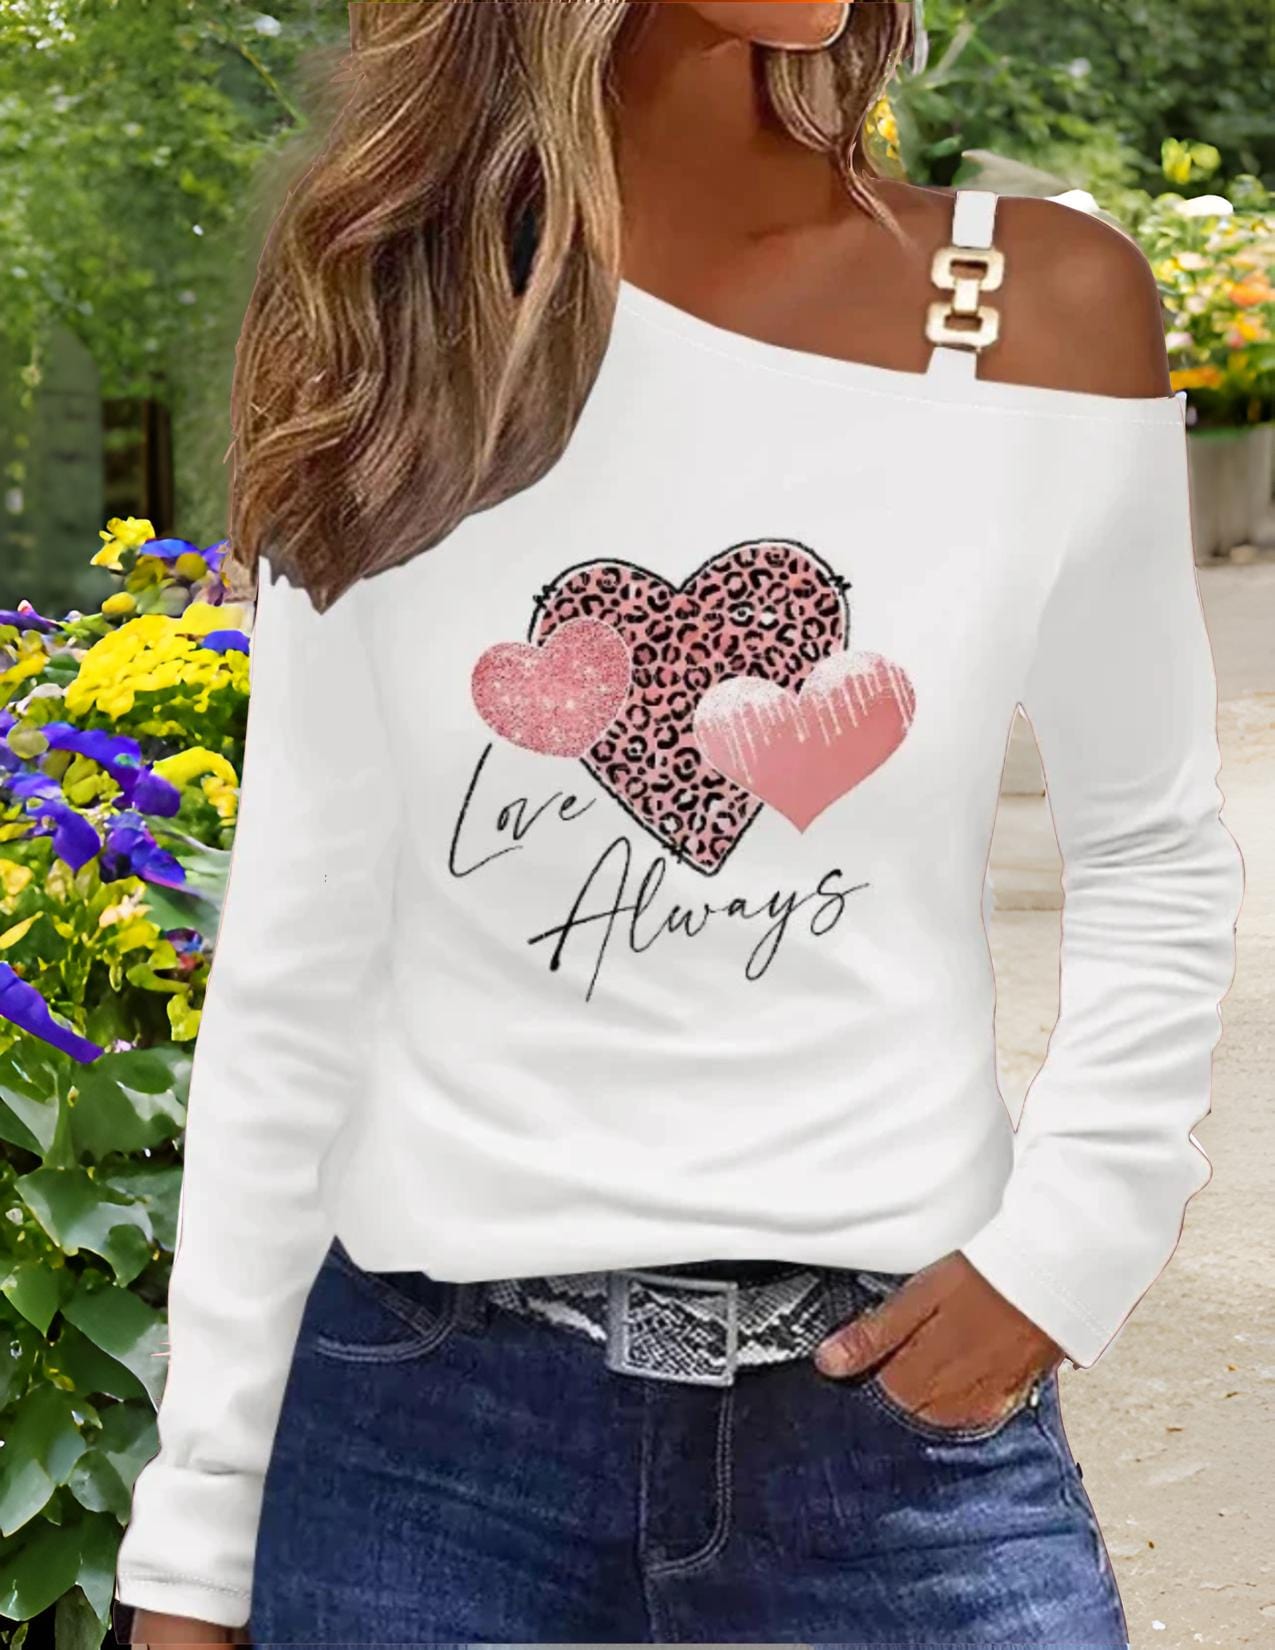 women-t-shirt-tops-elegant-cold-shoulder-graphic-heart-slogan-leopard-peace-love-coffee-print-top-female-fall-long-sleeve-top